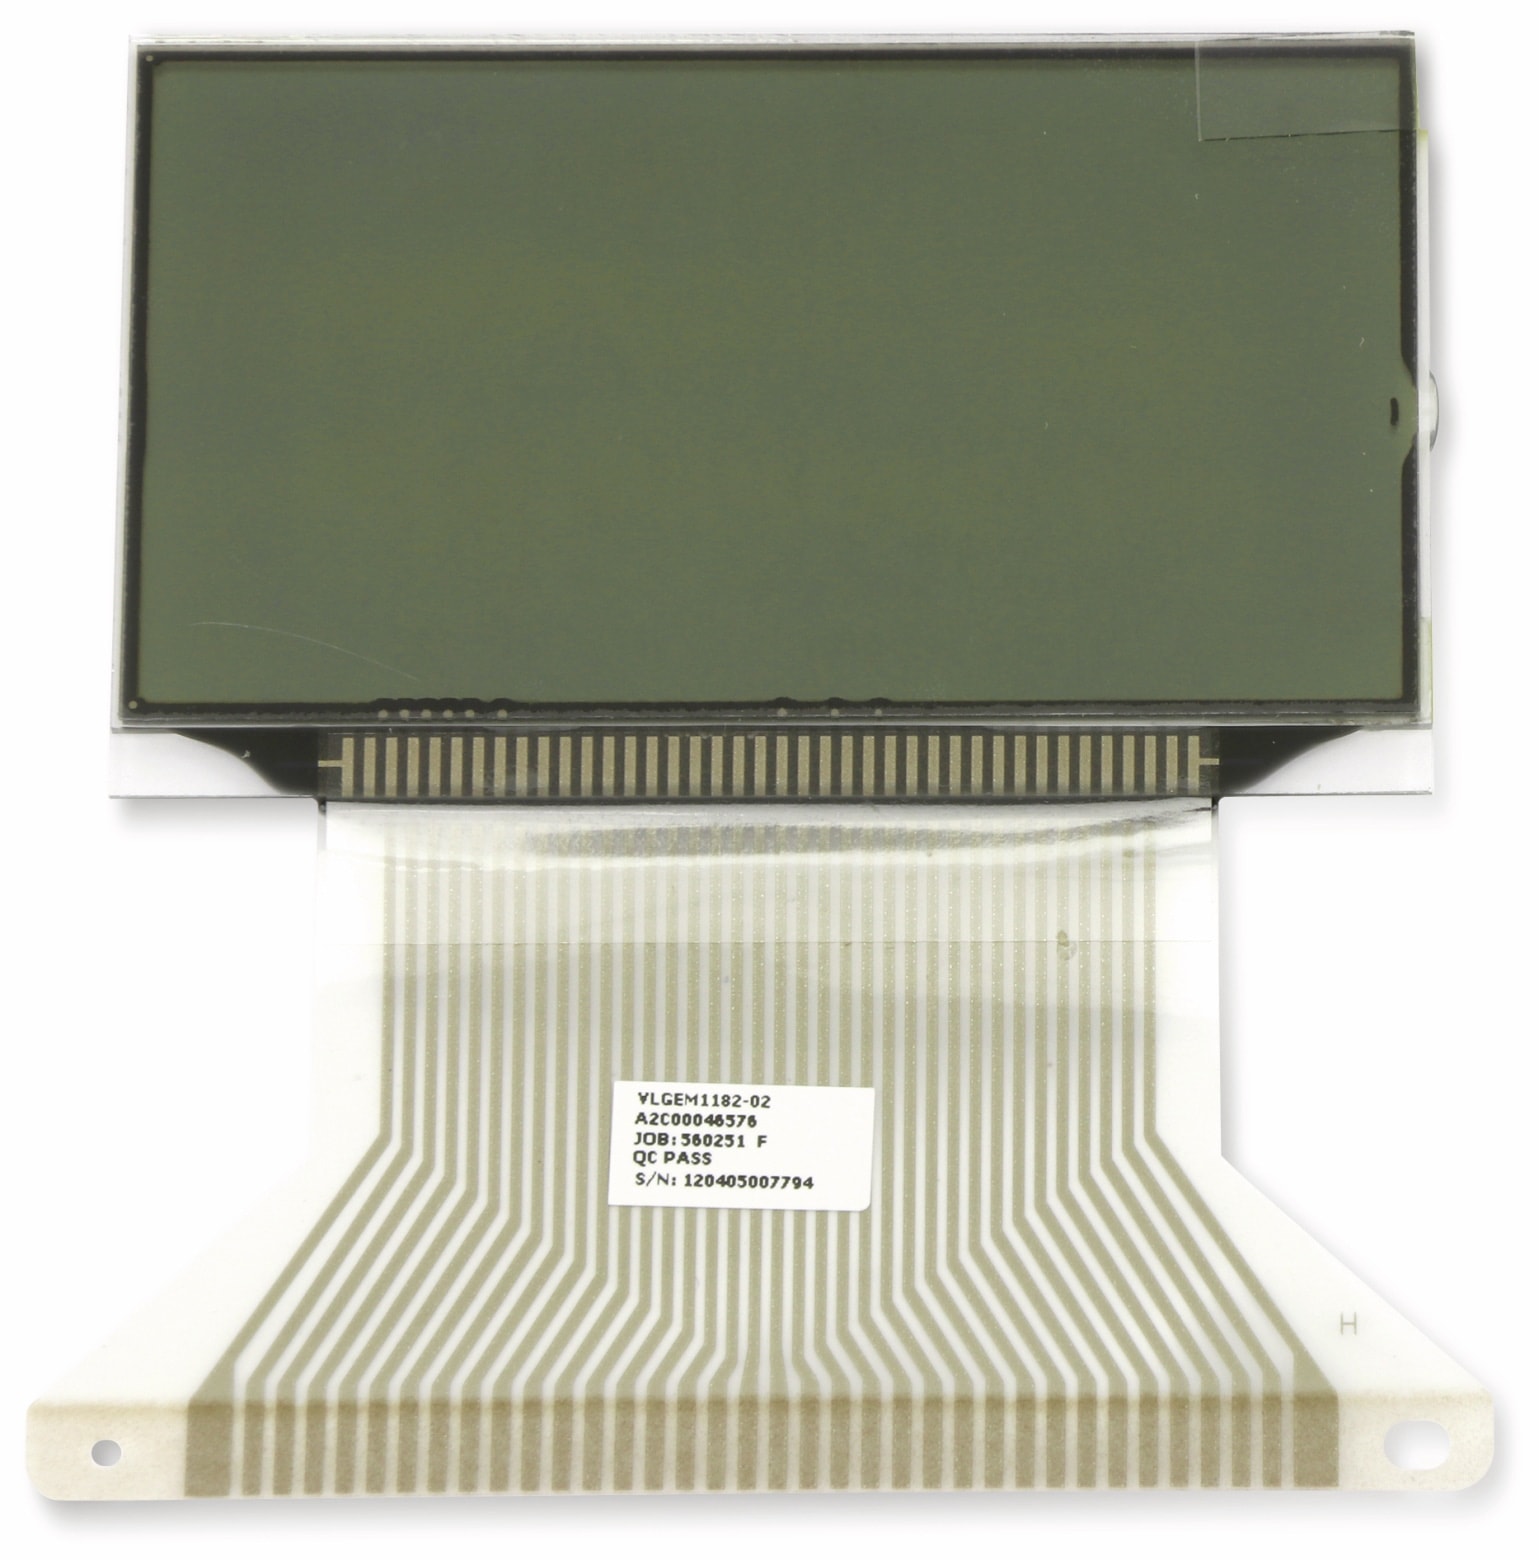 VARITRONIX LCD-Modul VLGEM1182-02